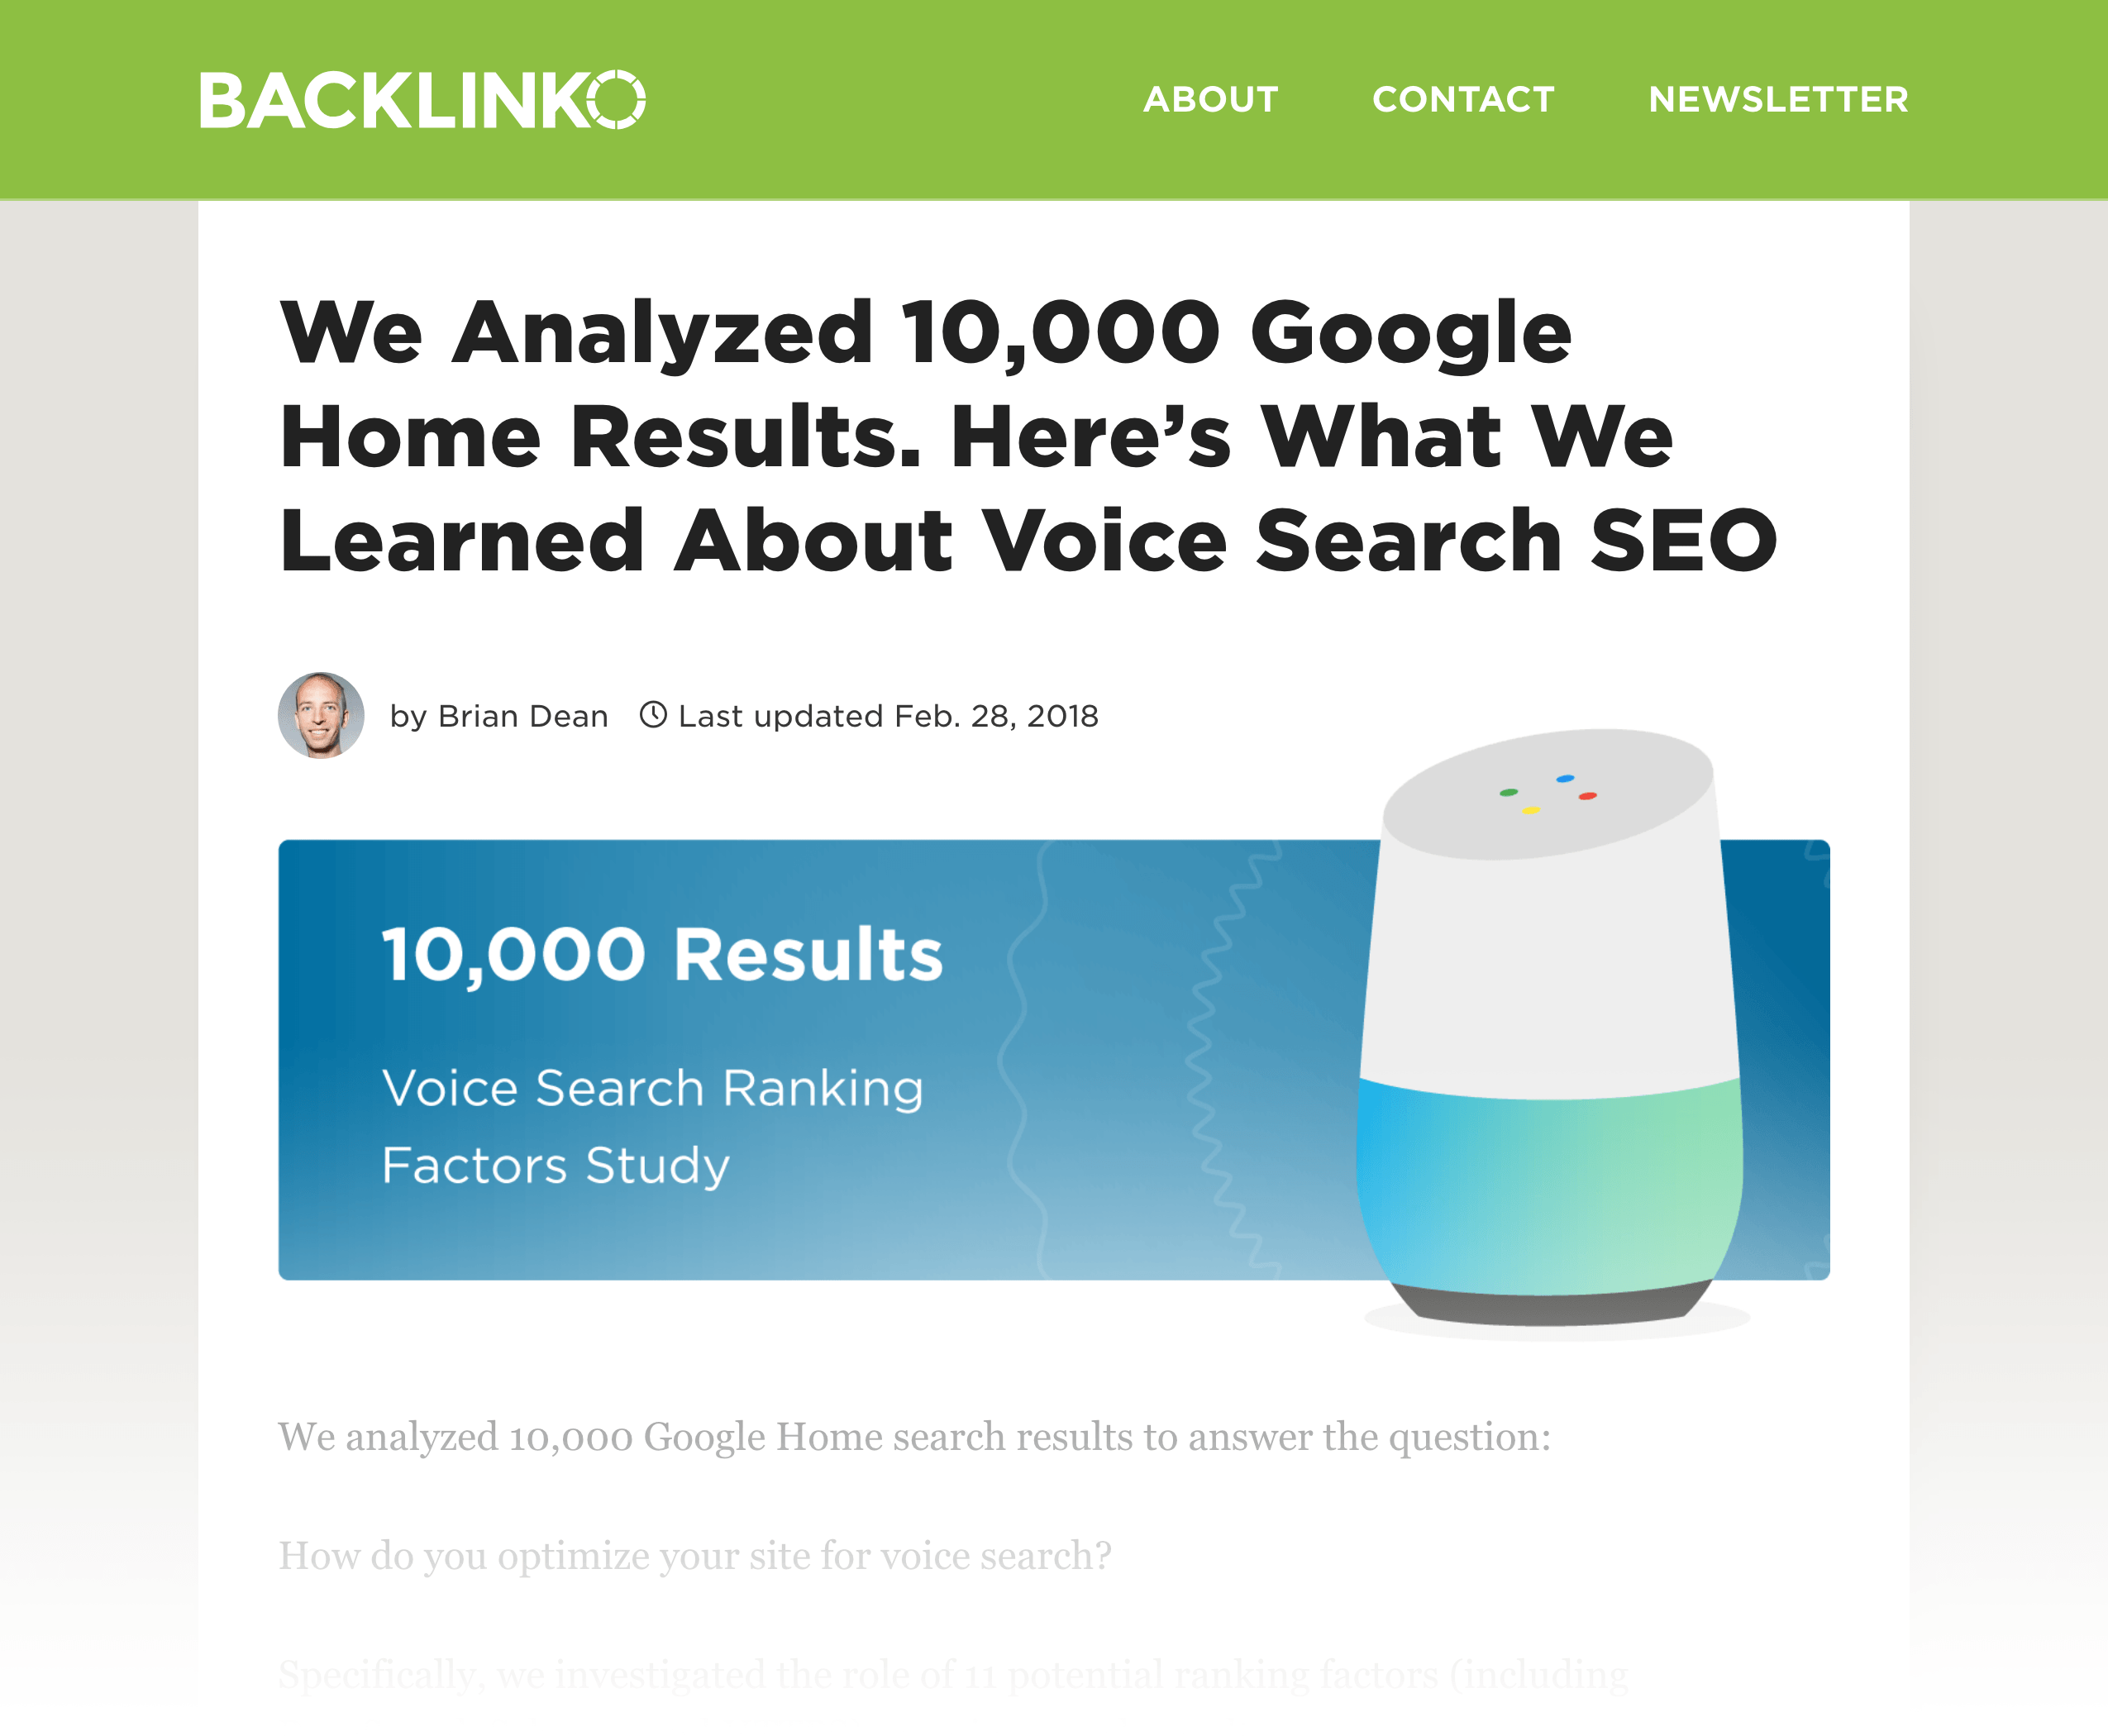 Voice Search Ranking Factors